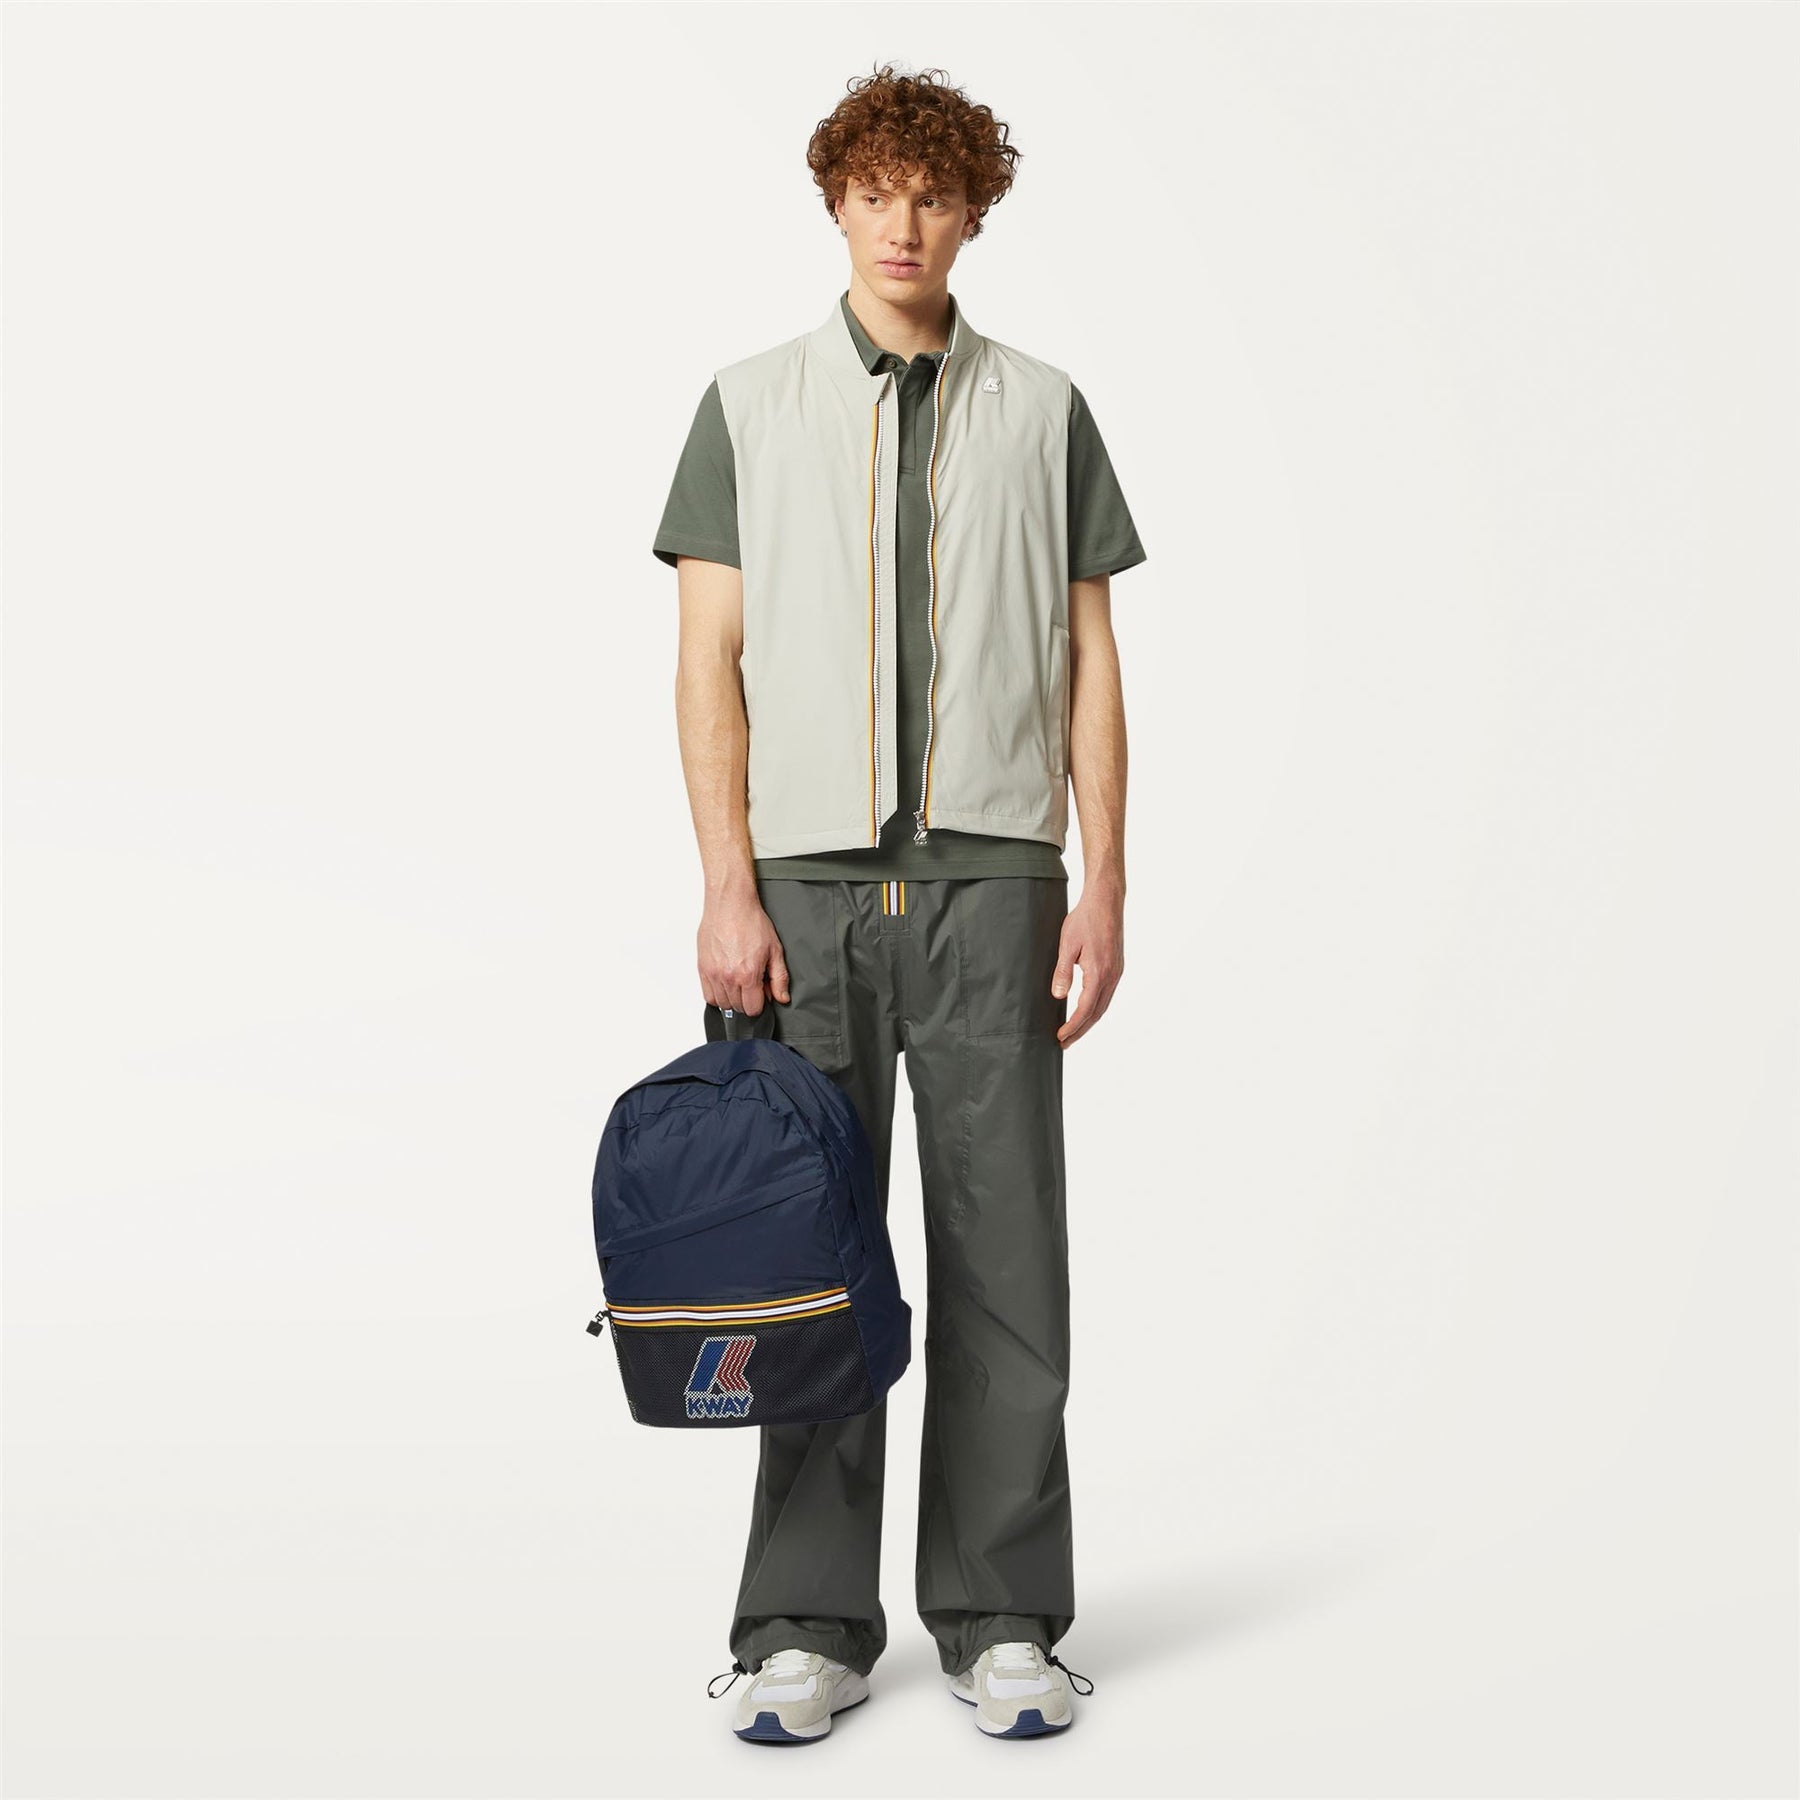 Francois - Packable Ripstop Backpack in Blue Depht